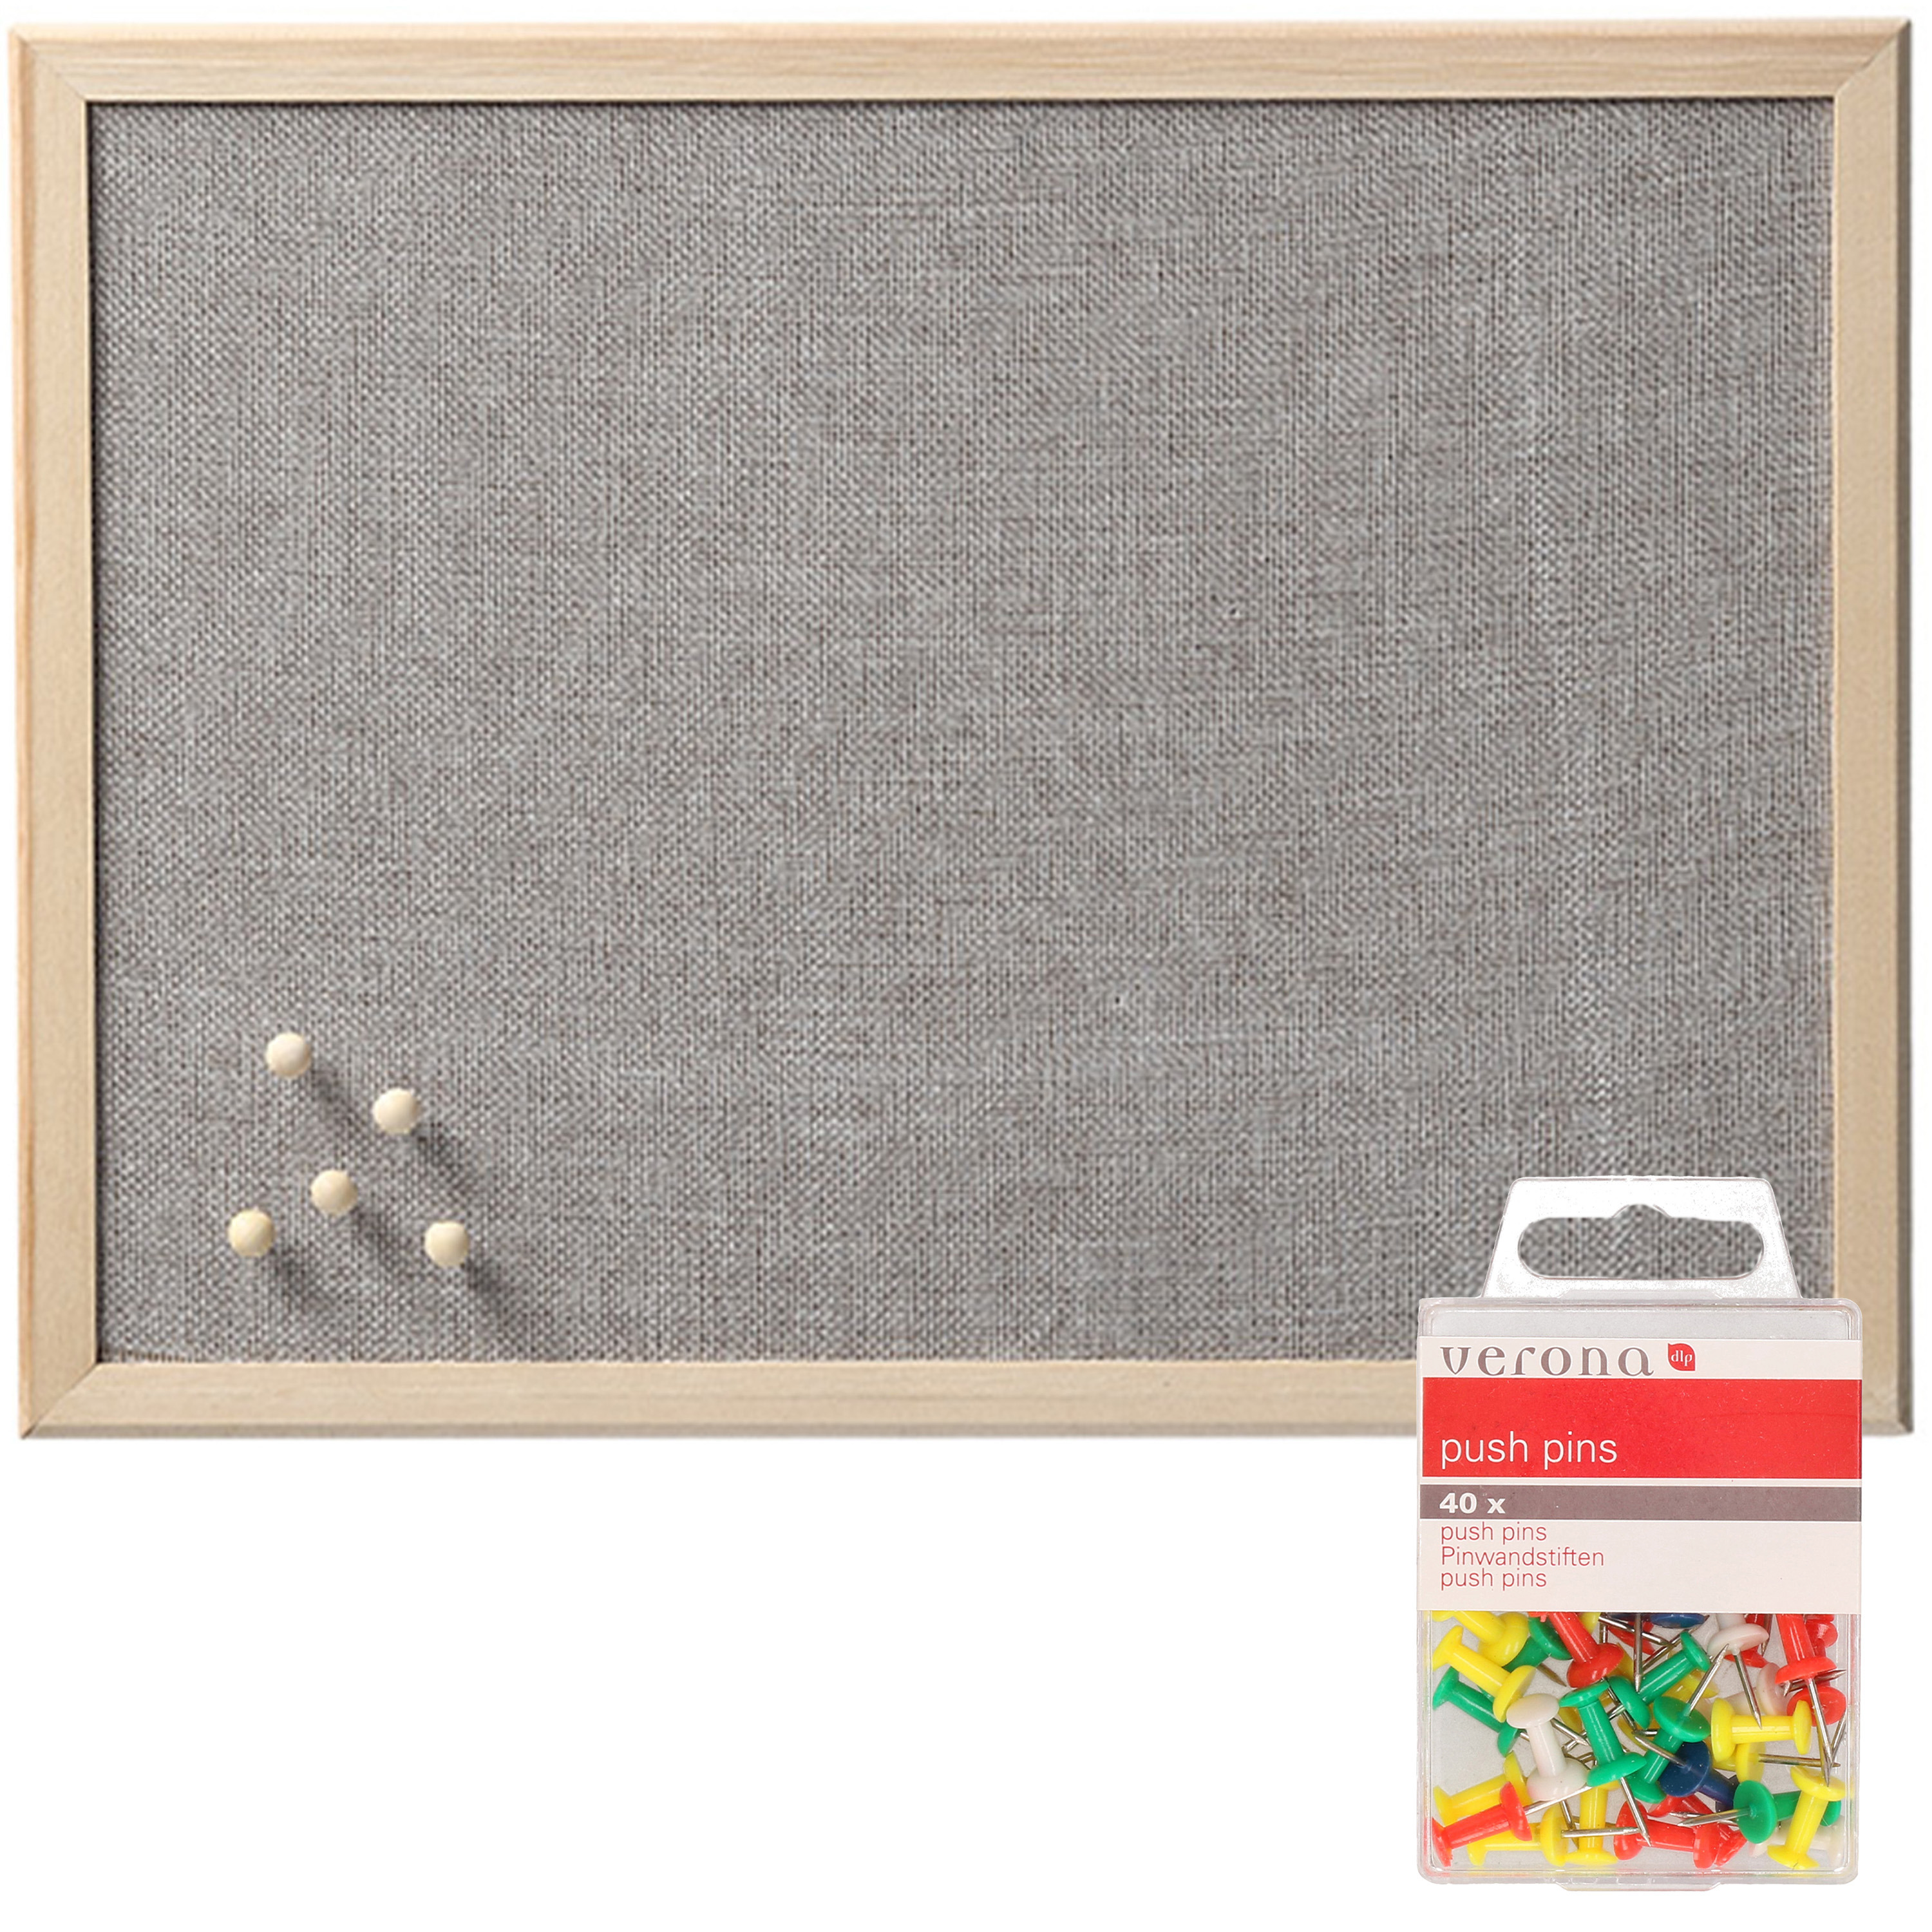 Prikbord incl. 40x punaises gekleurd 40 x 60 cm grijs textiel